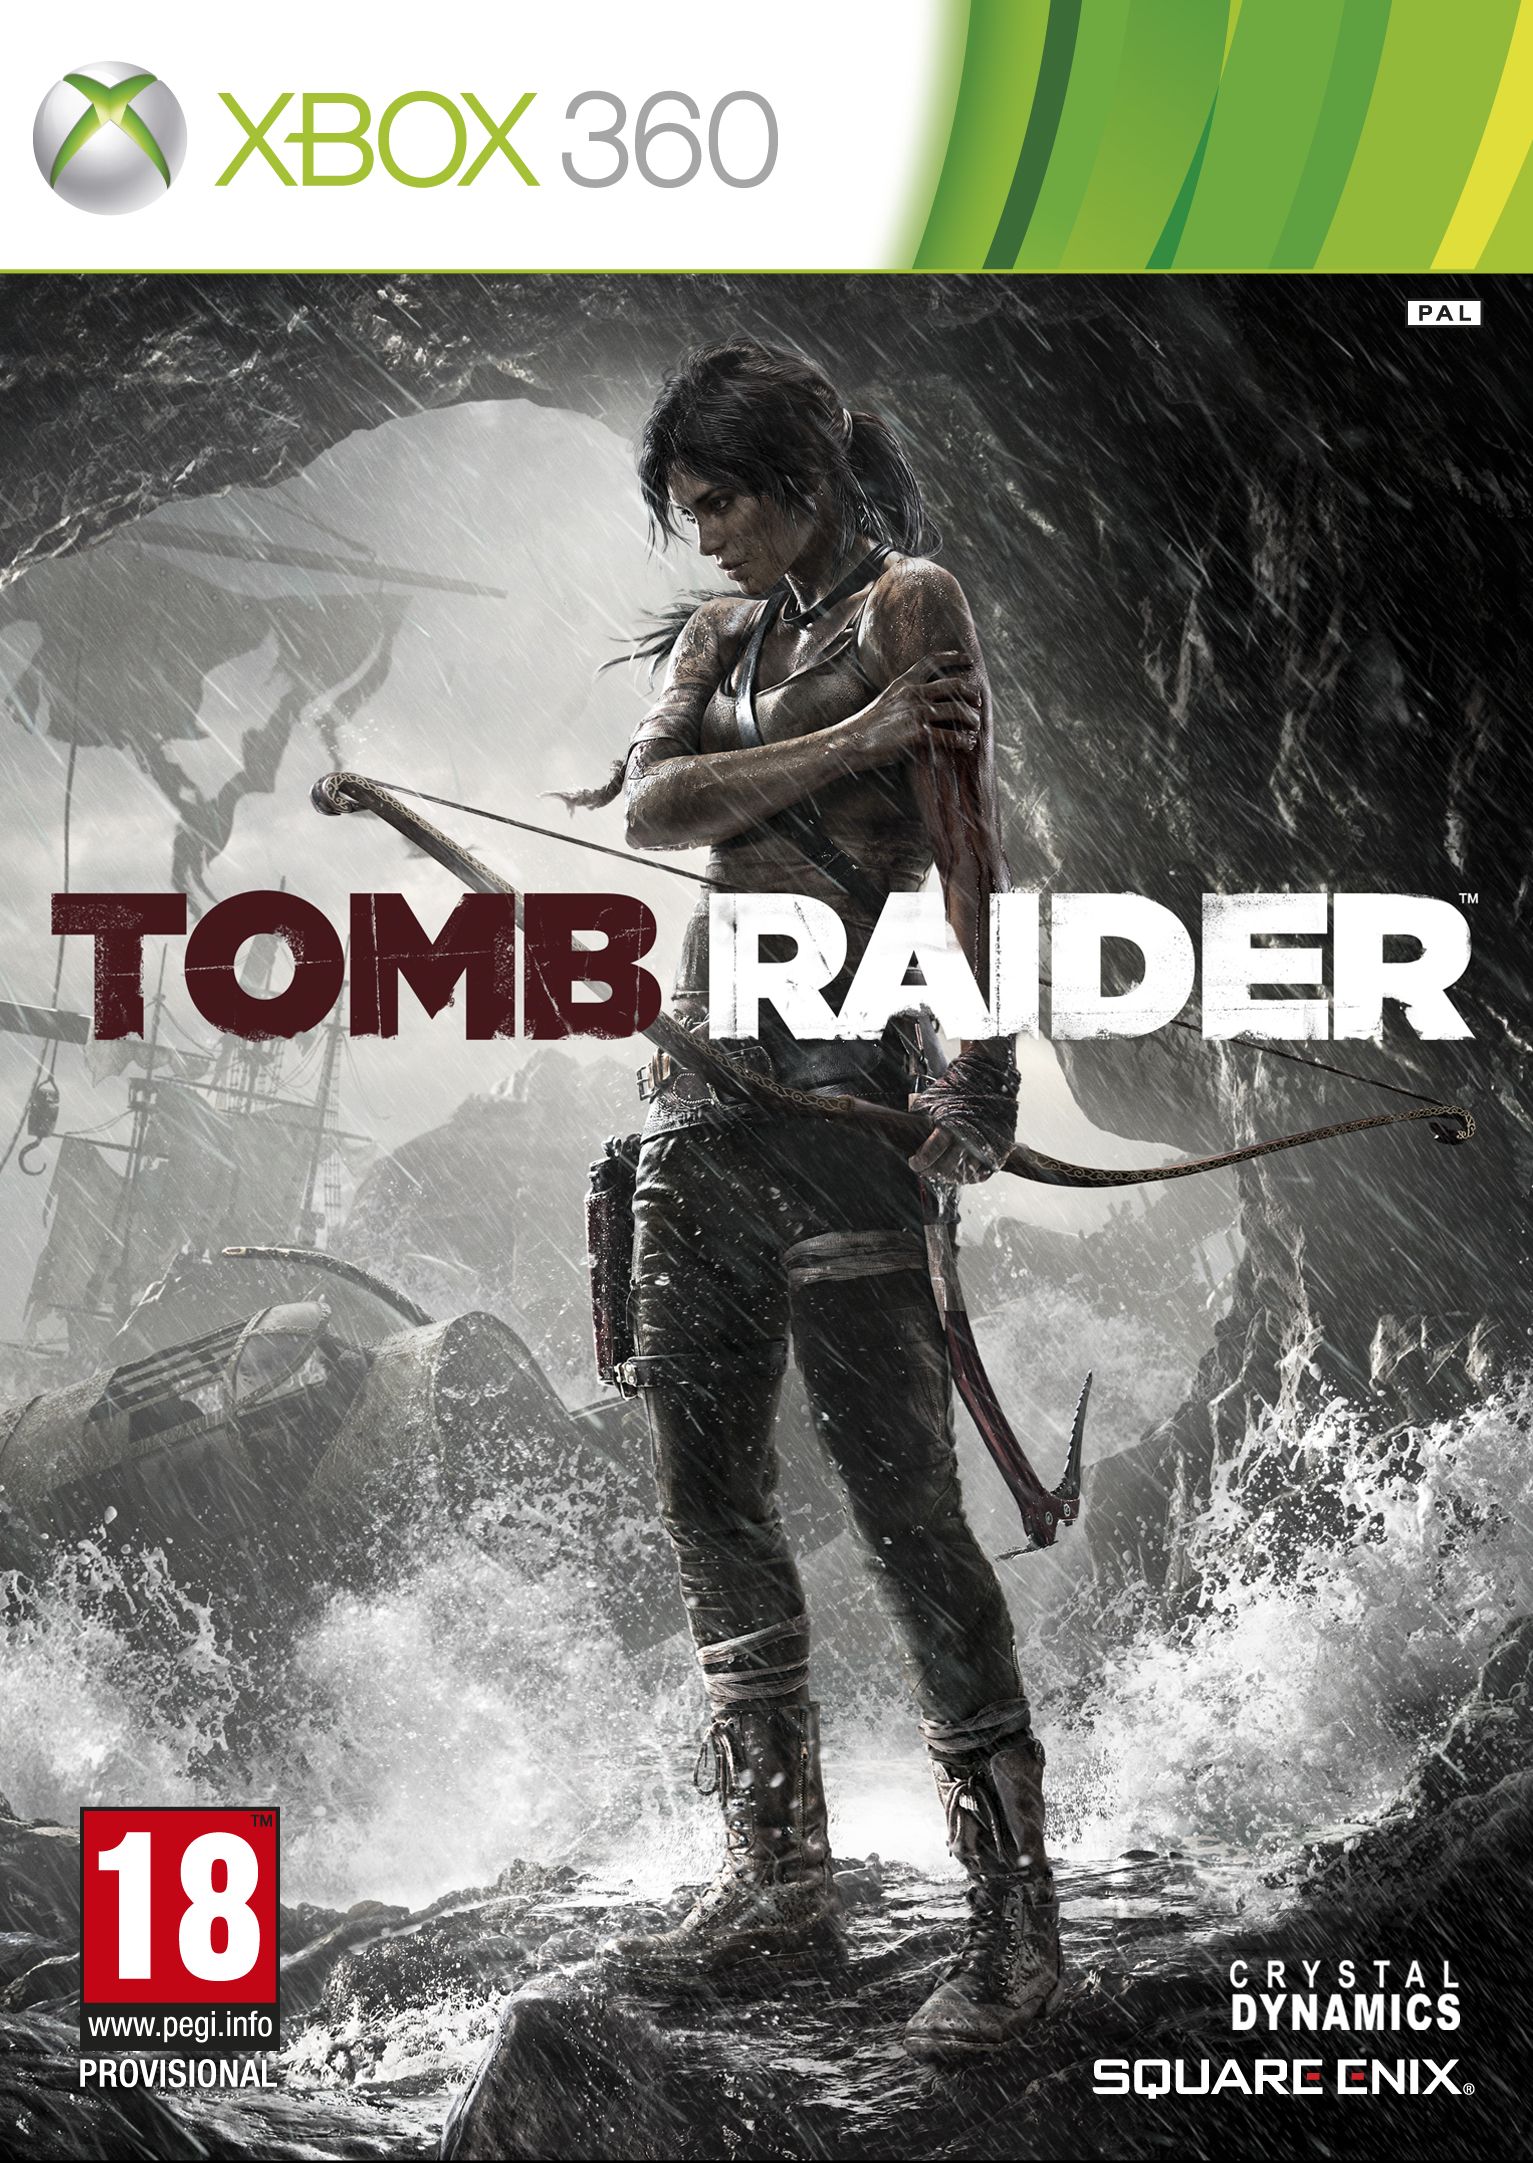 Tomb Raider Combat Strike Limited Edition (2013)